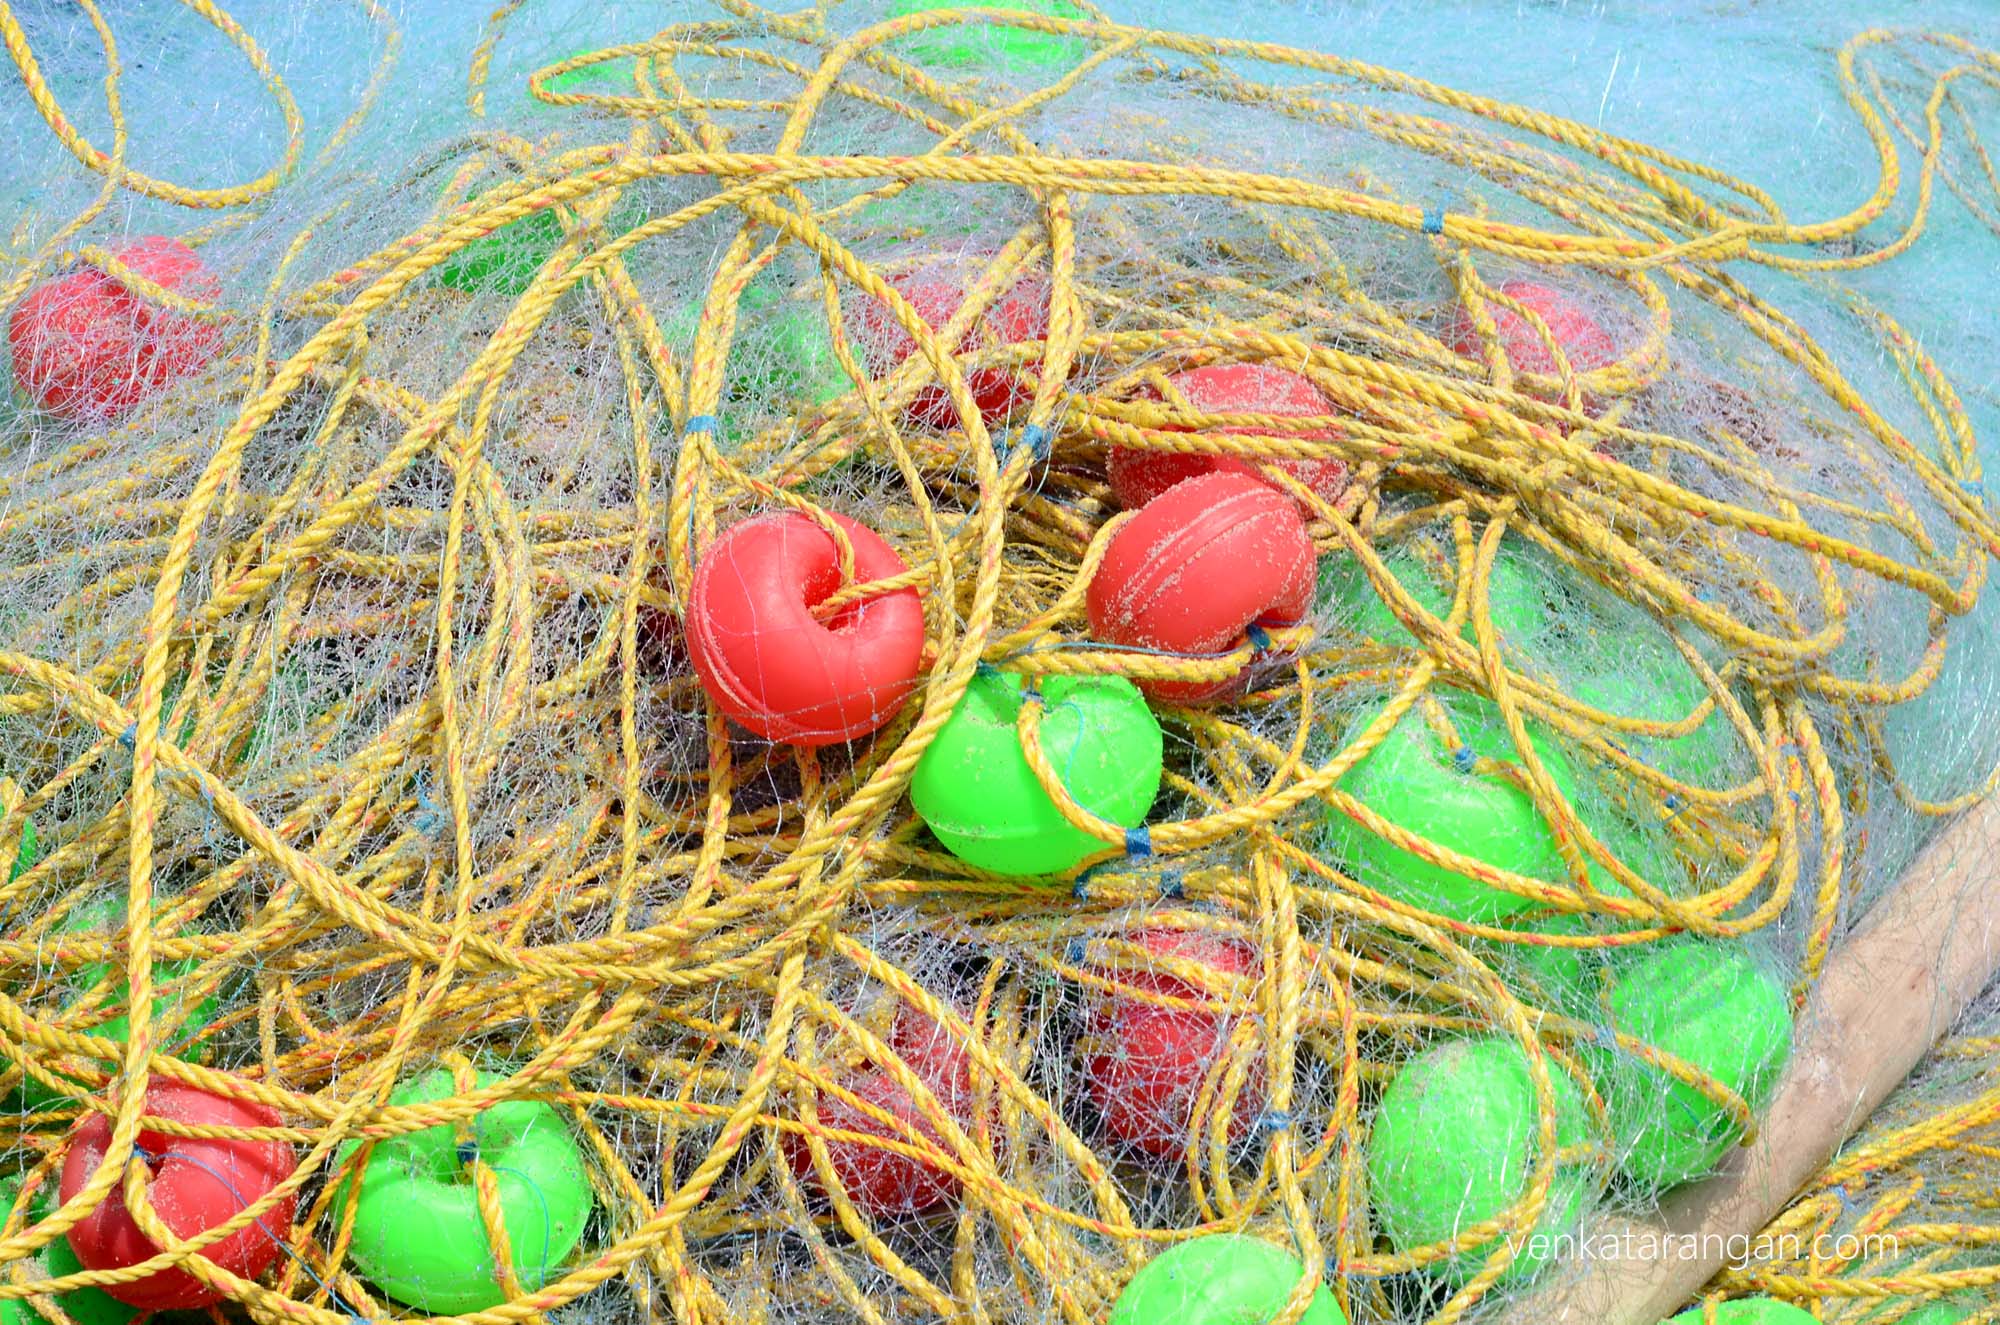 Colourful fishing net